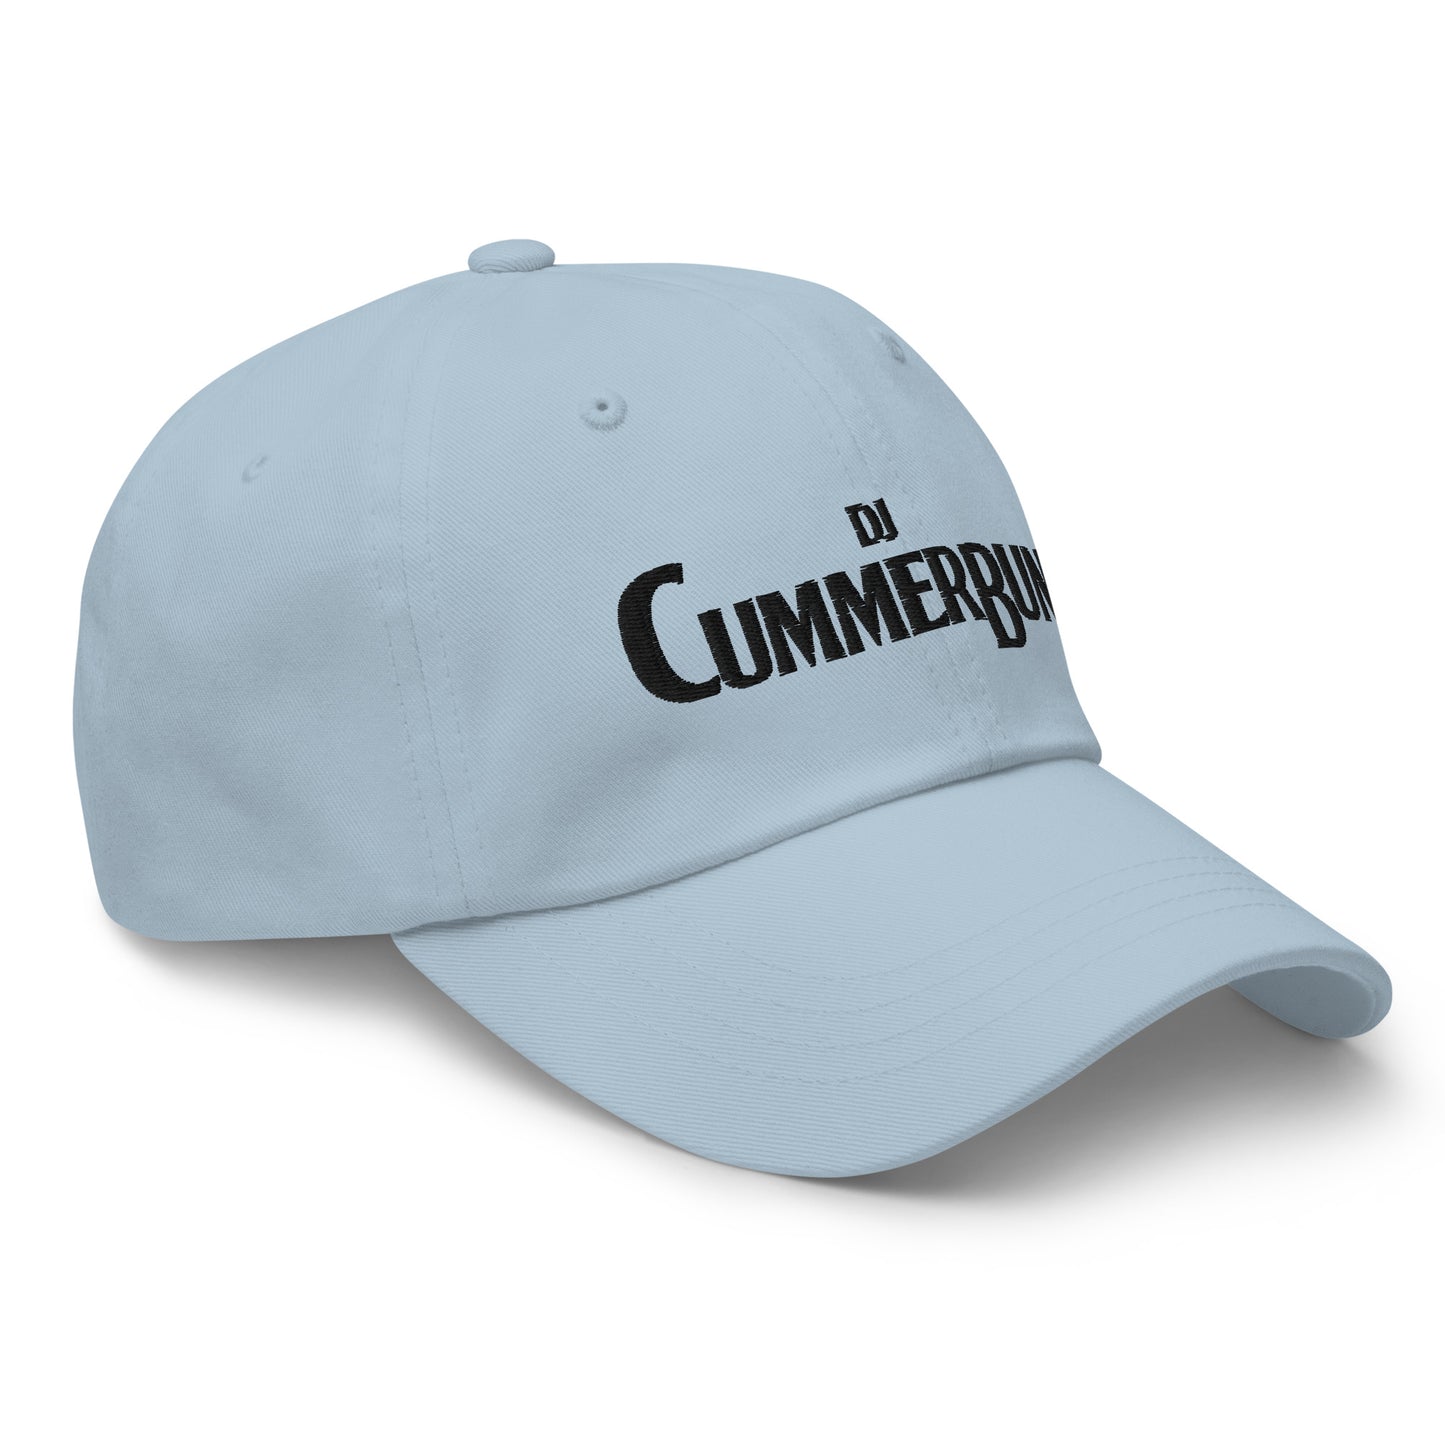 All You Need Is Cummerbund Light Hat